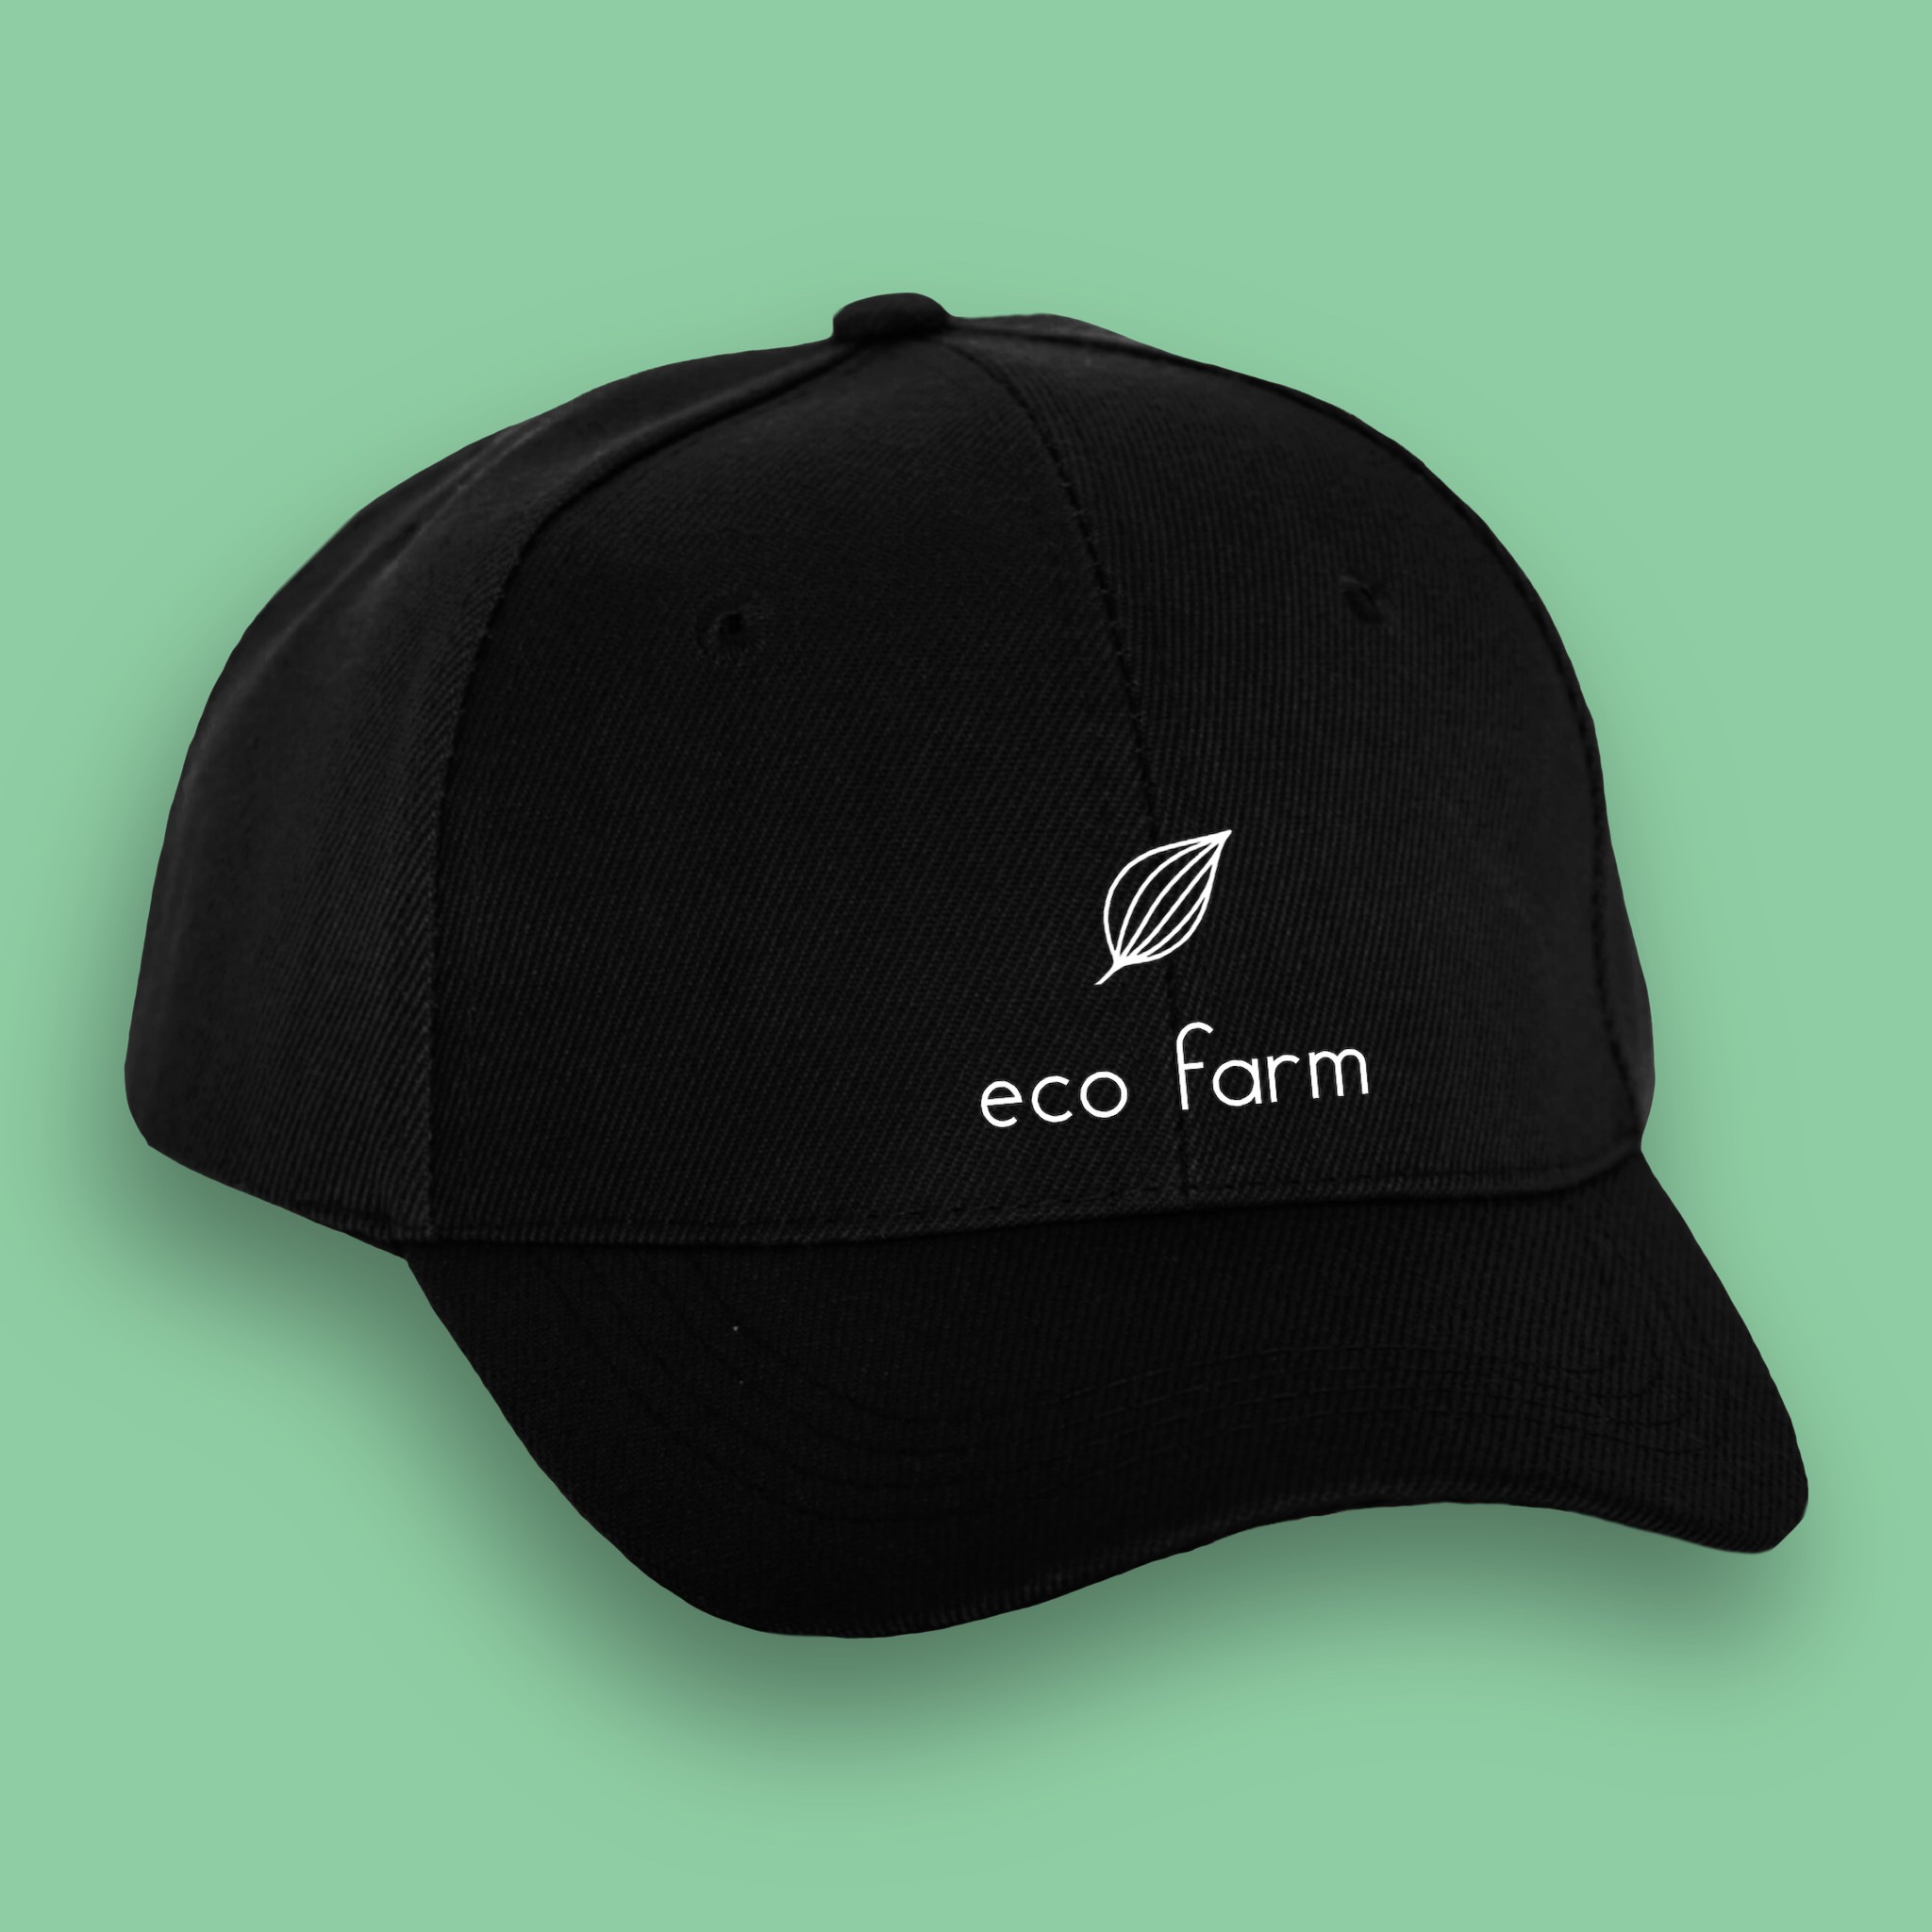 Eco Farm Black Hat Mock Up Logo Template